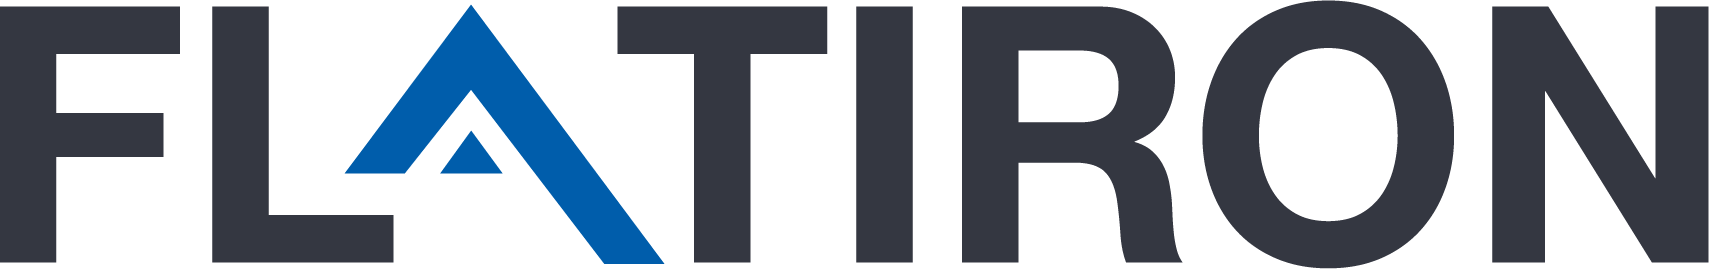 Flatiron Logo_Full Color_RGB (002).png